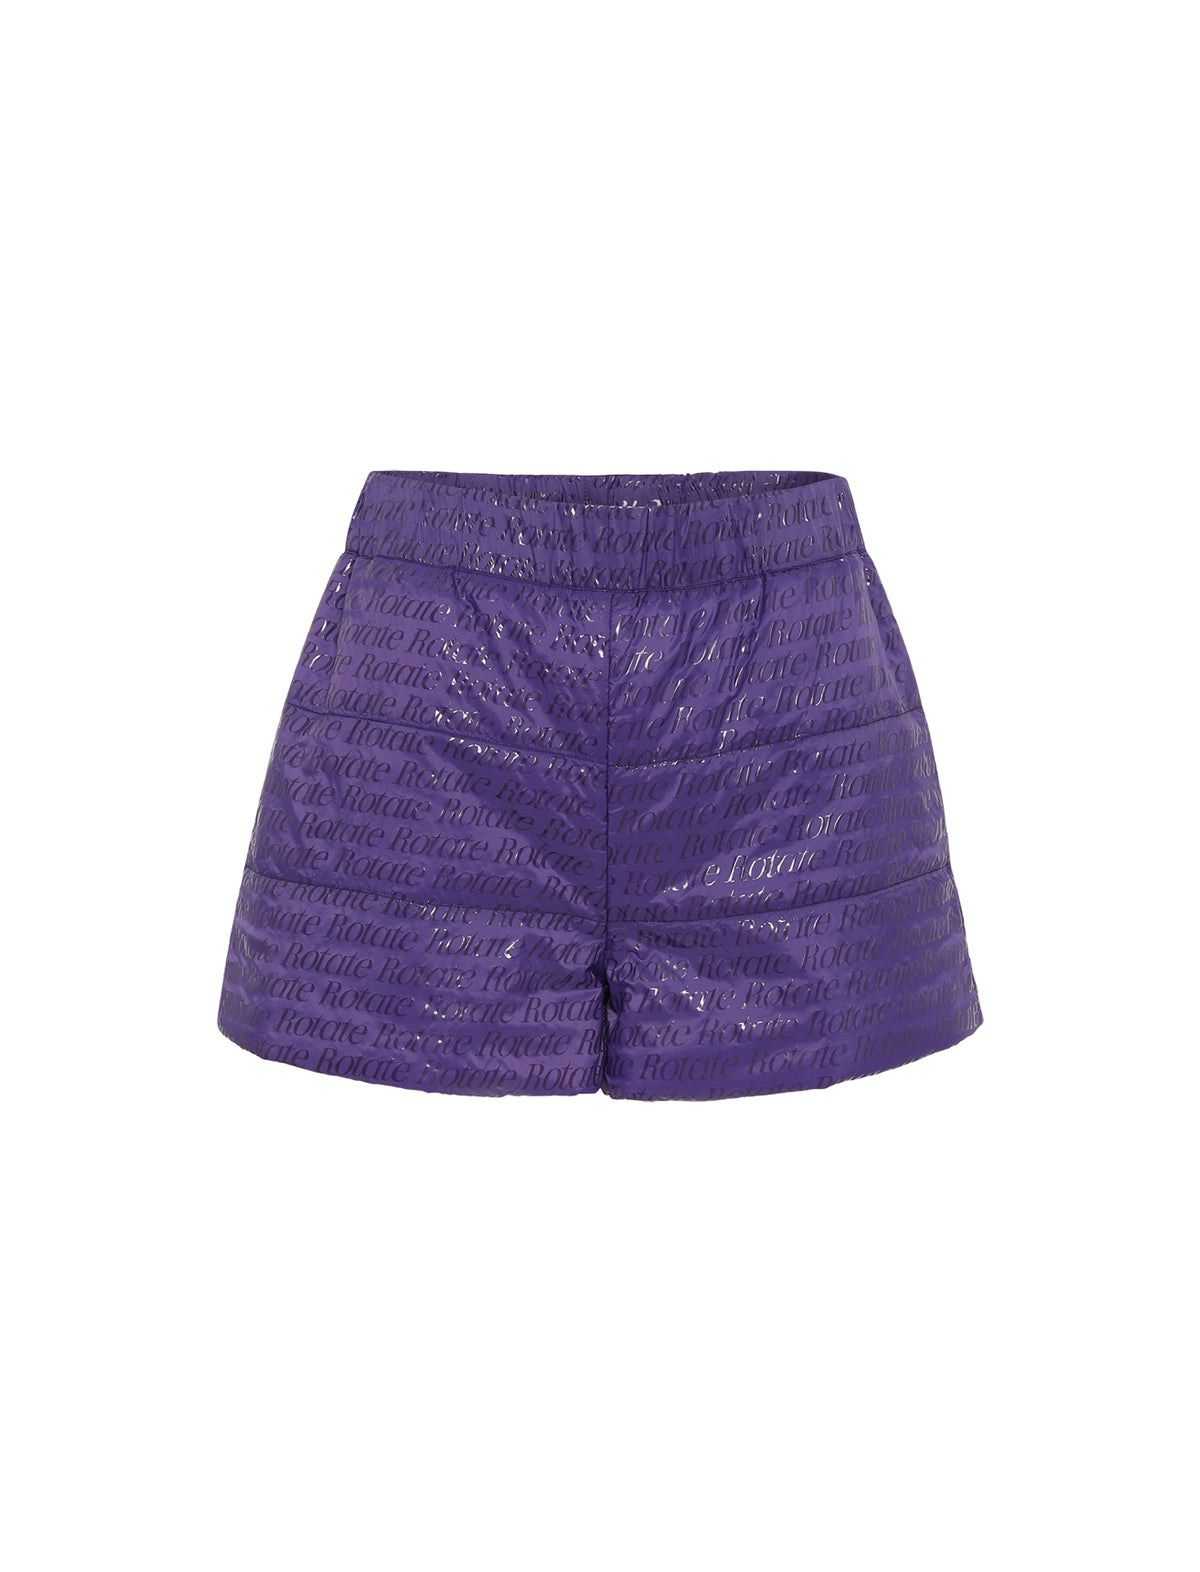 ROTATE Sunday 3 Kensa Shorts in Purple